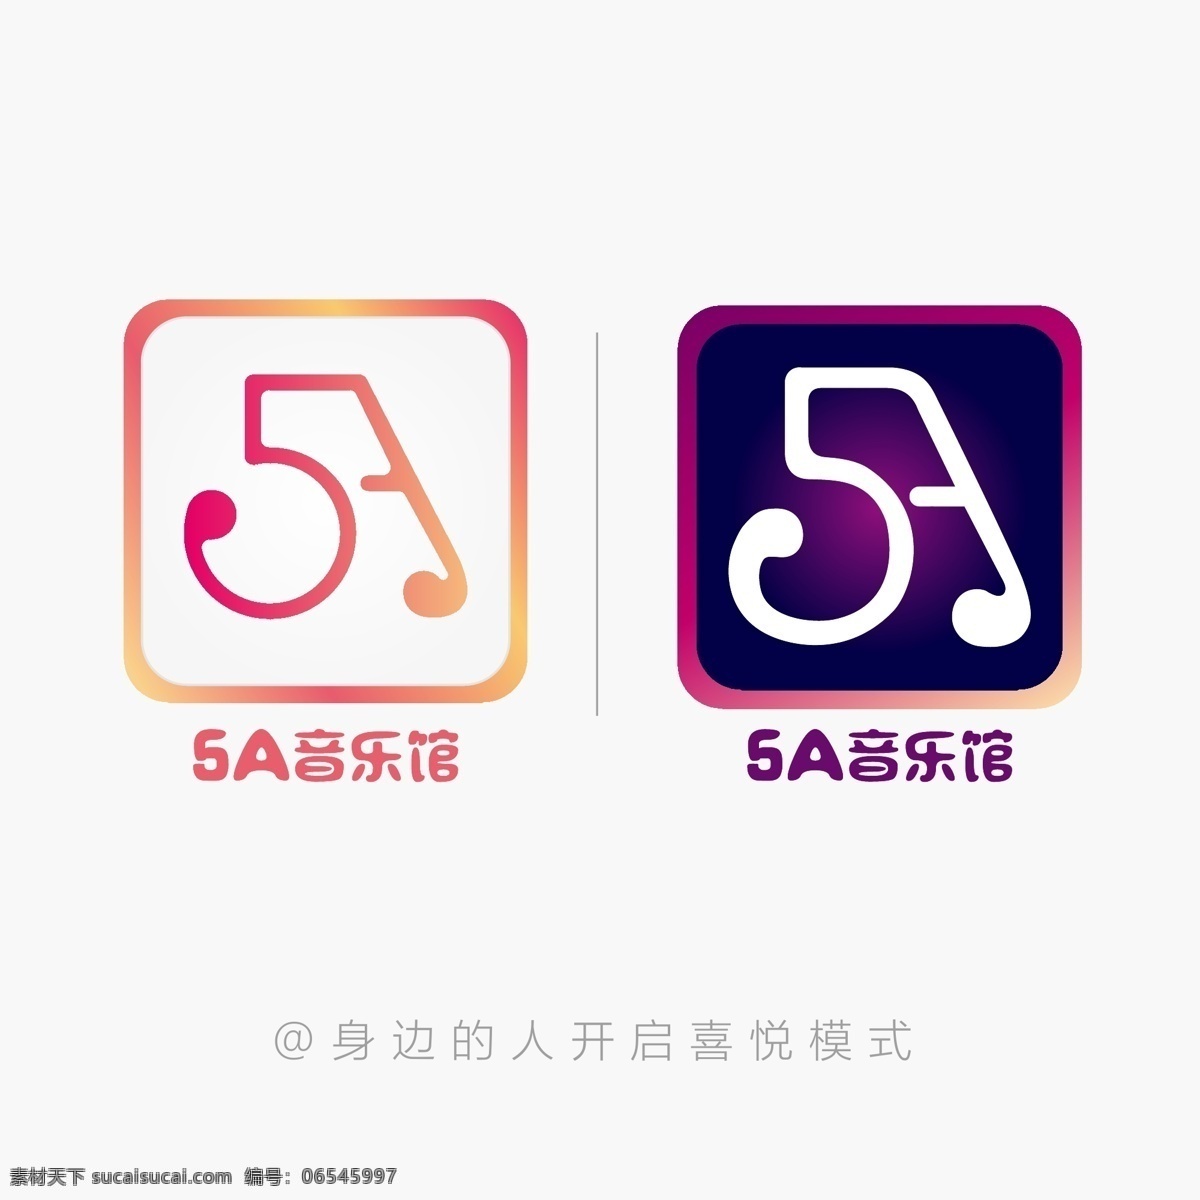 5a 音乐 馆 图标 5a音乐馆 logo 标识 音乐符号 炫彩 渐变 字体设计 身边的人